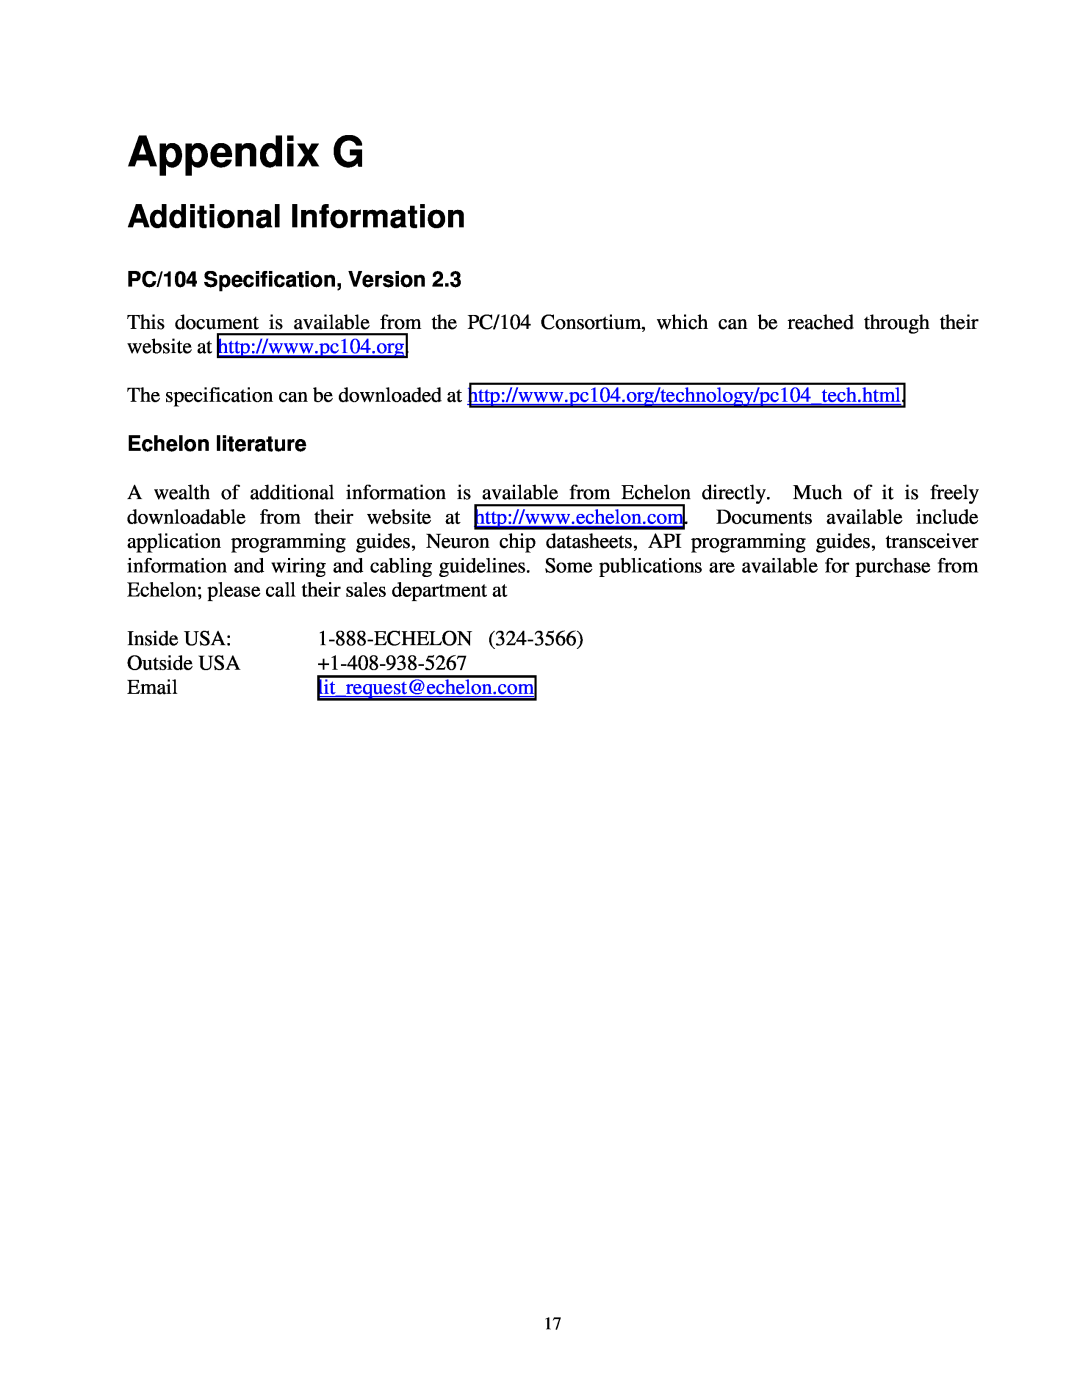 Vista LM104-P50 manual Appendix G, Additional Information, PC/104 Specification, Version, Echelon literature 